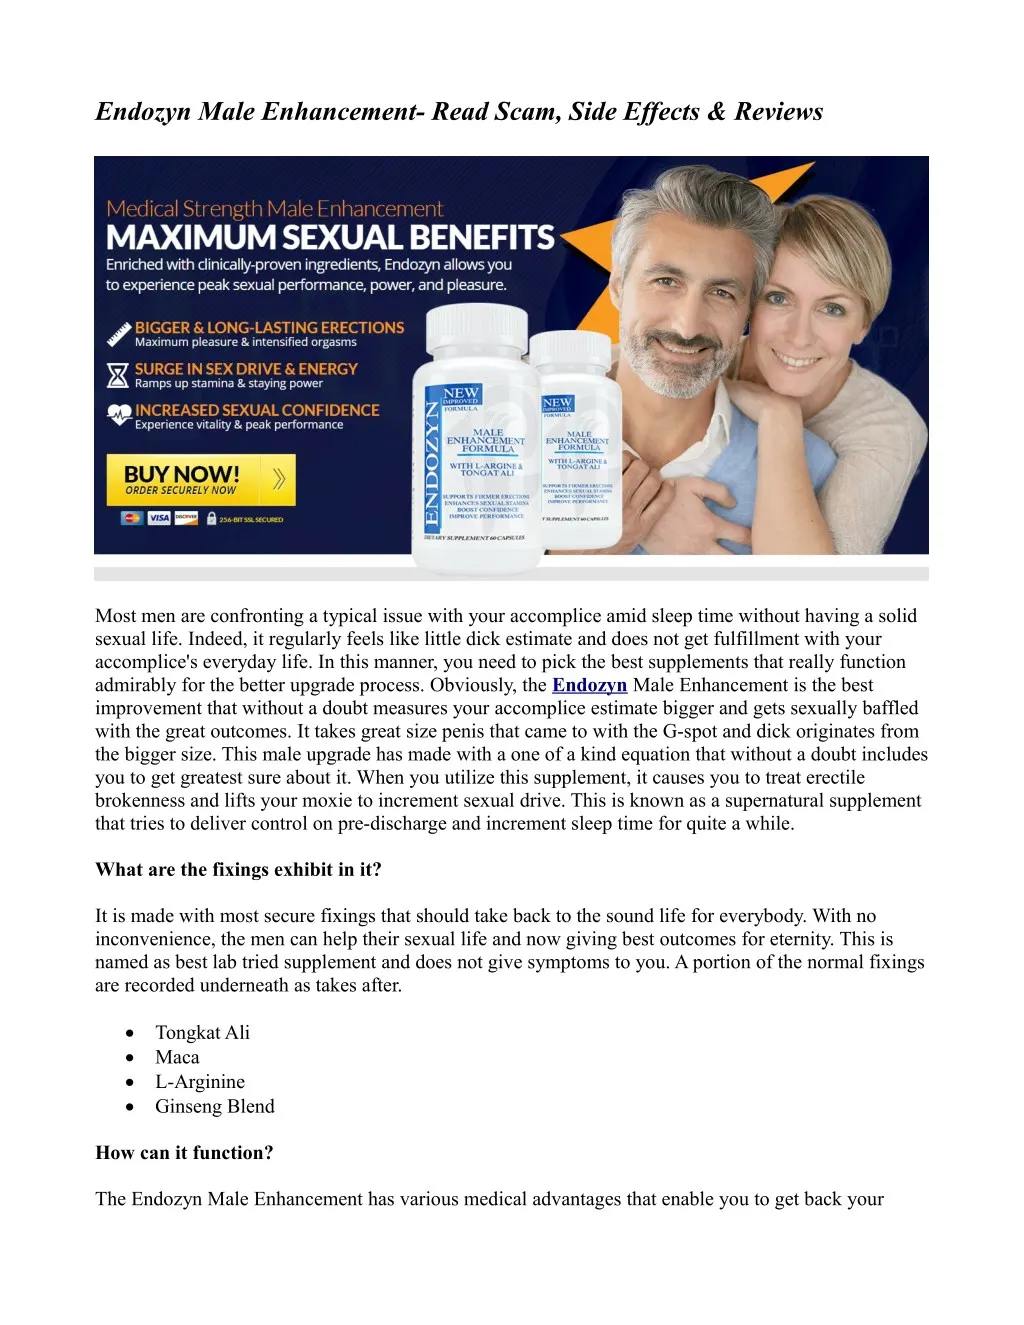 endozyn male enhancement read scam side effects